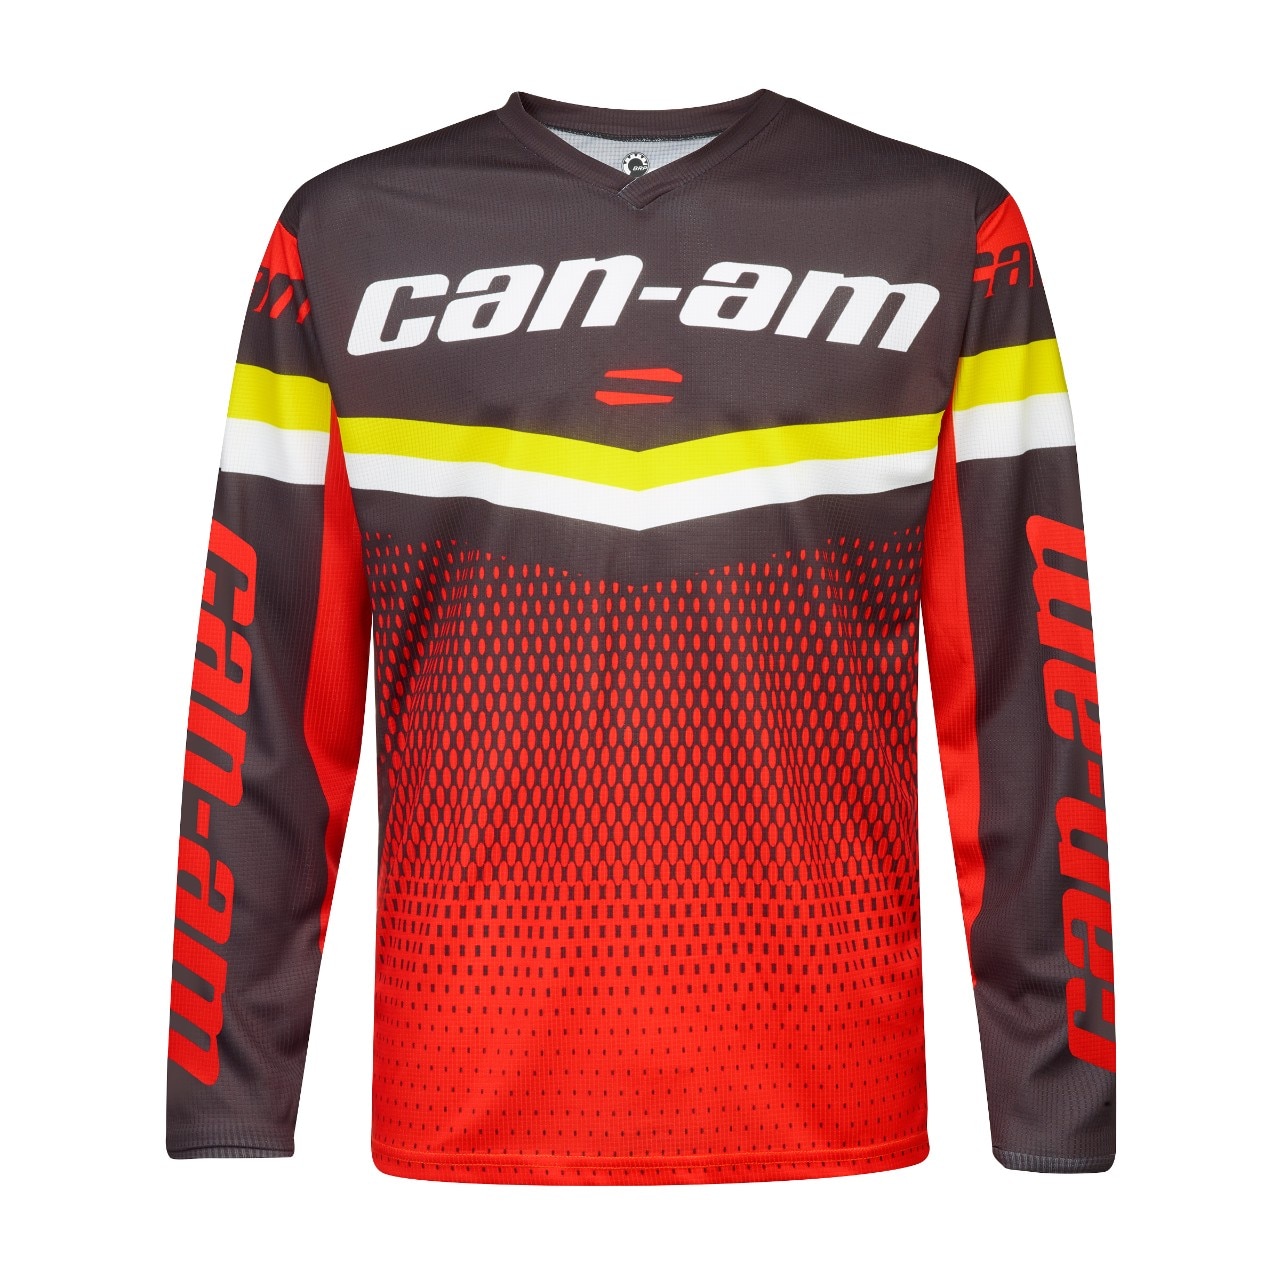 Can-Am Jersey riding gear